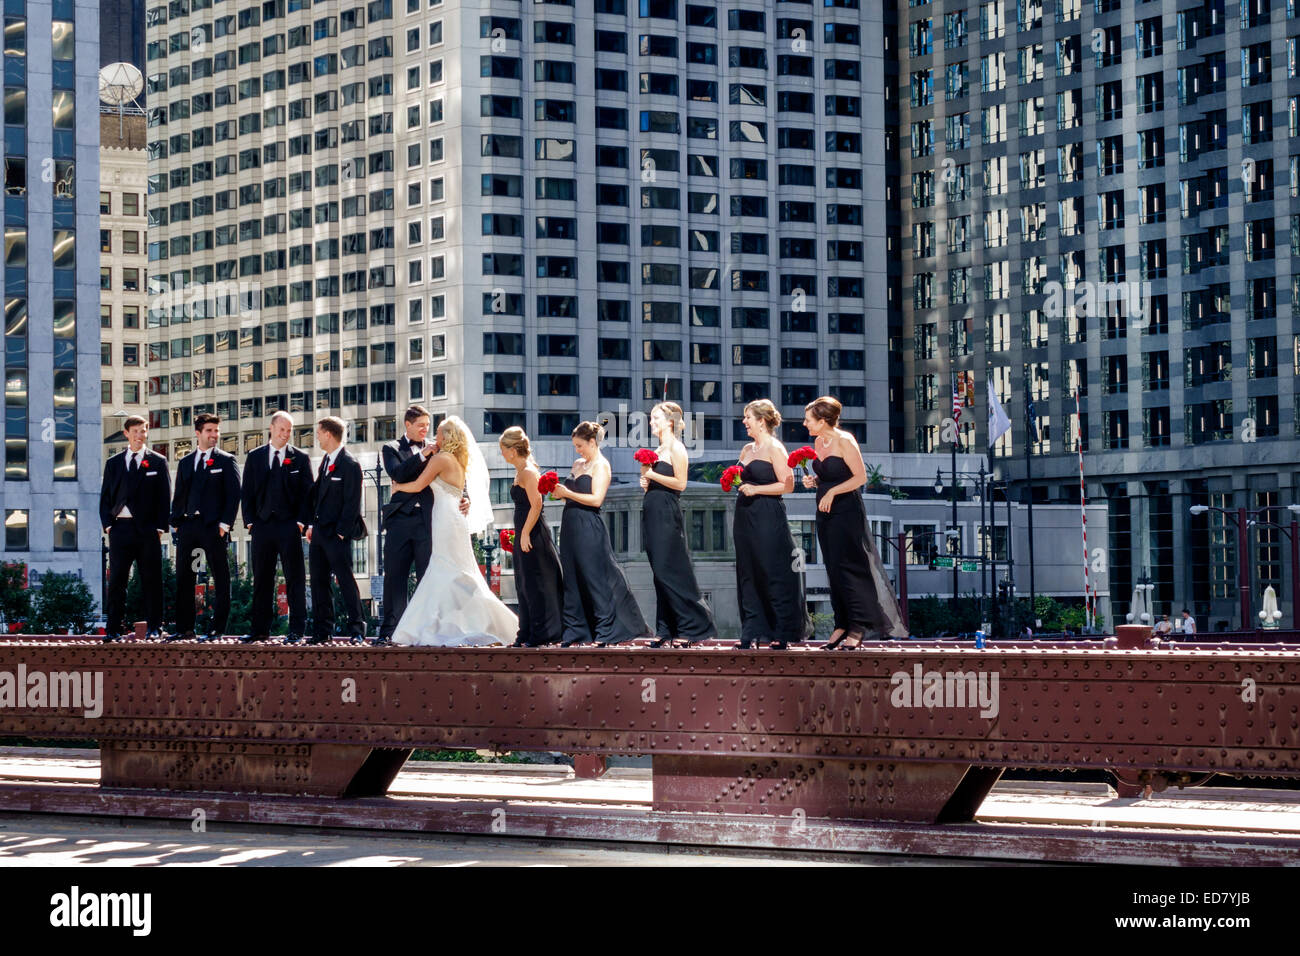 Chicago Illinois, North Wabash Avenue Bridge, fiesta de boda, novio, novia, pastores, novias, posando,centro,rascacielos,edificios,IL140906129 Foto de stock